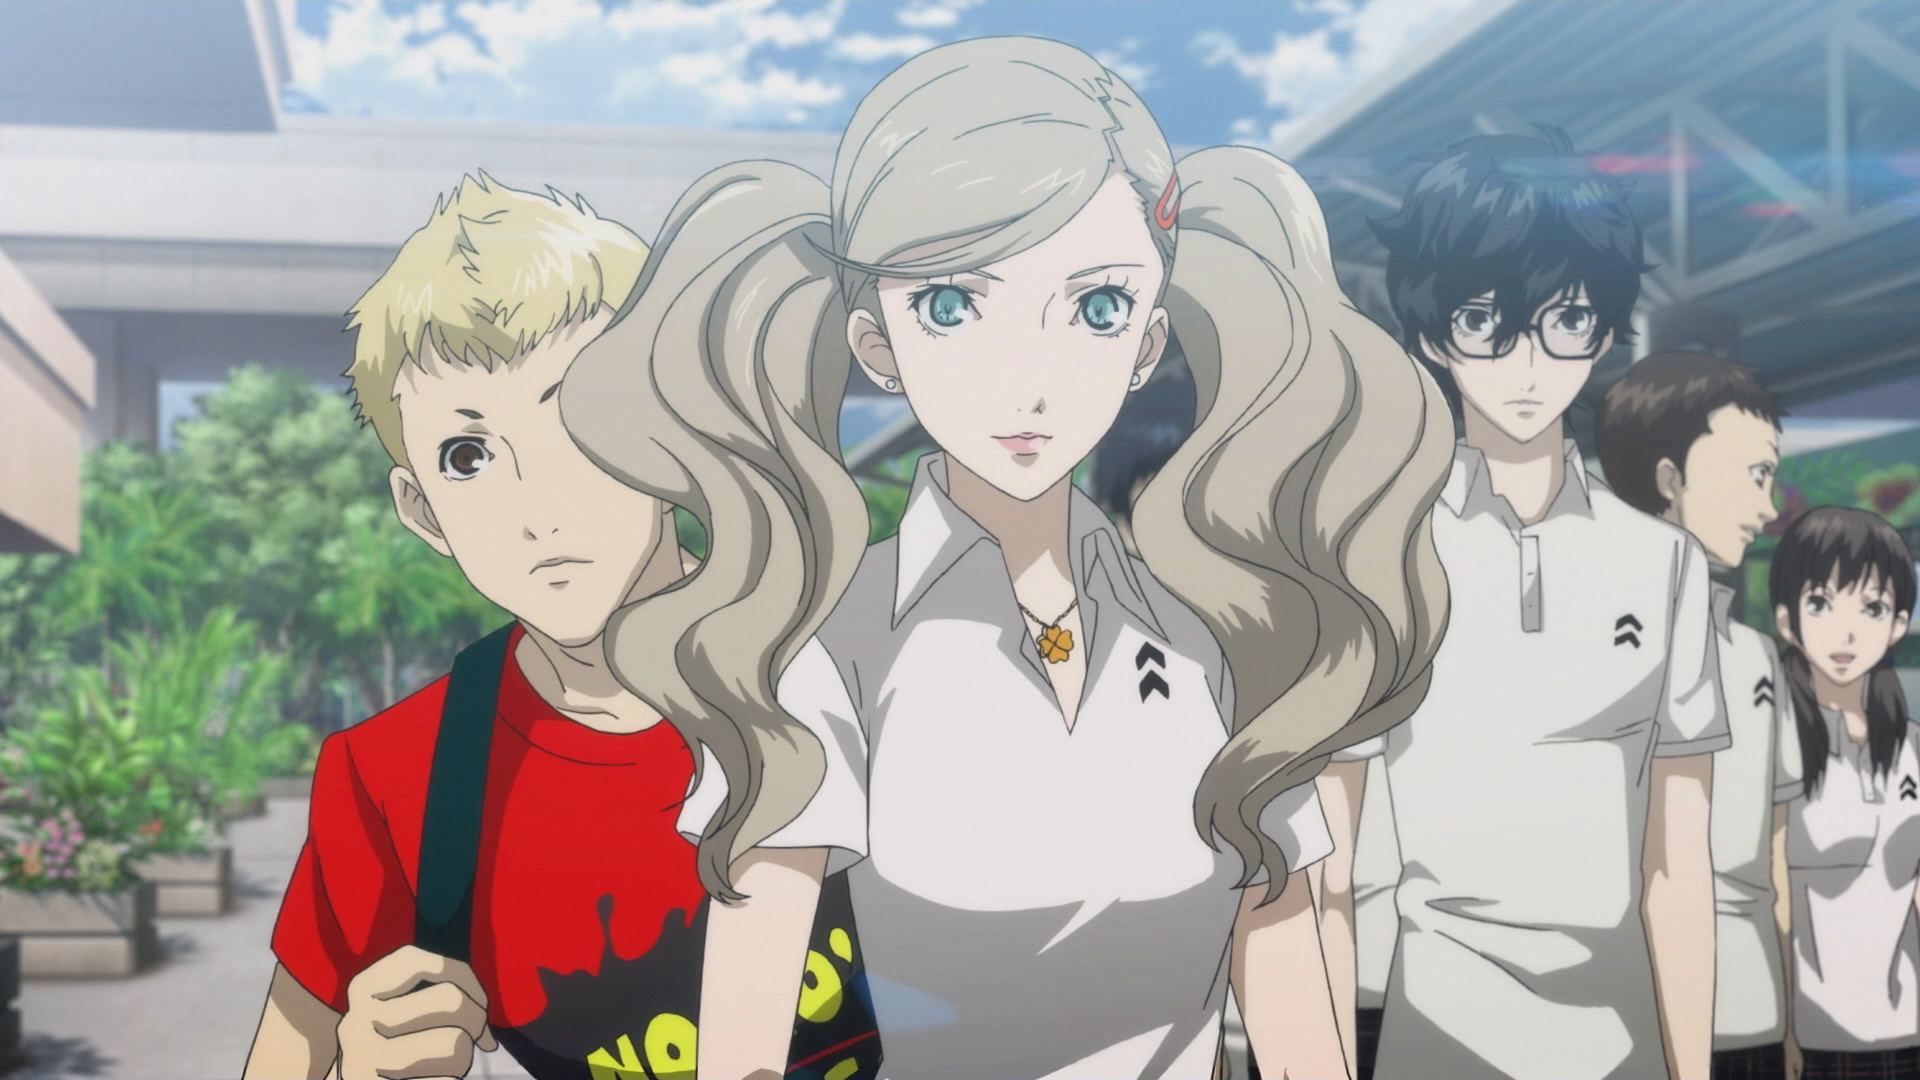 Persona 5 Royal's Ann, Ryuji, and Joker in their summer outfits, walking along an empty school passageway